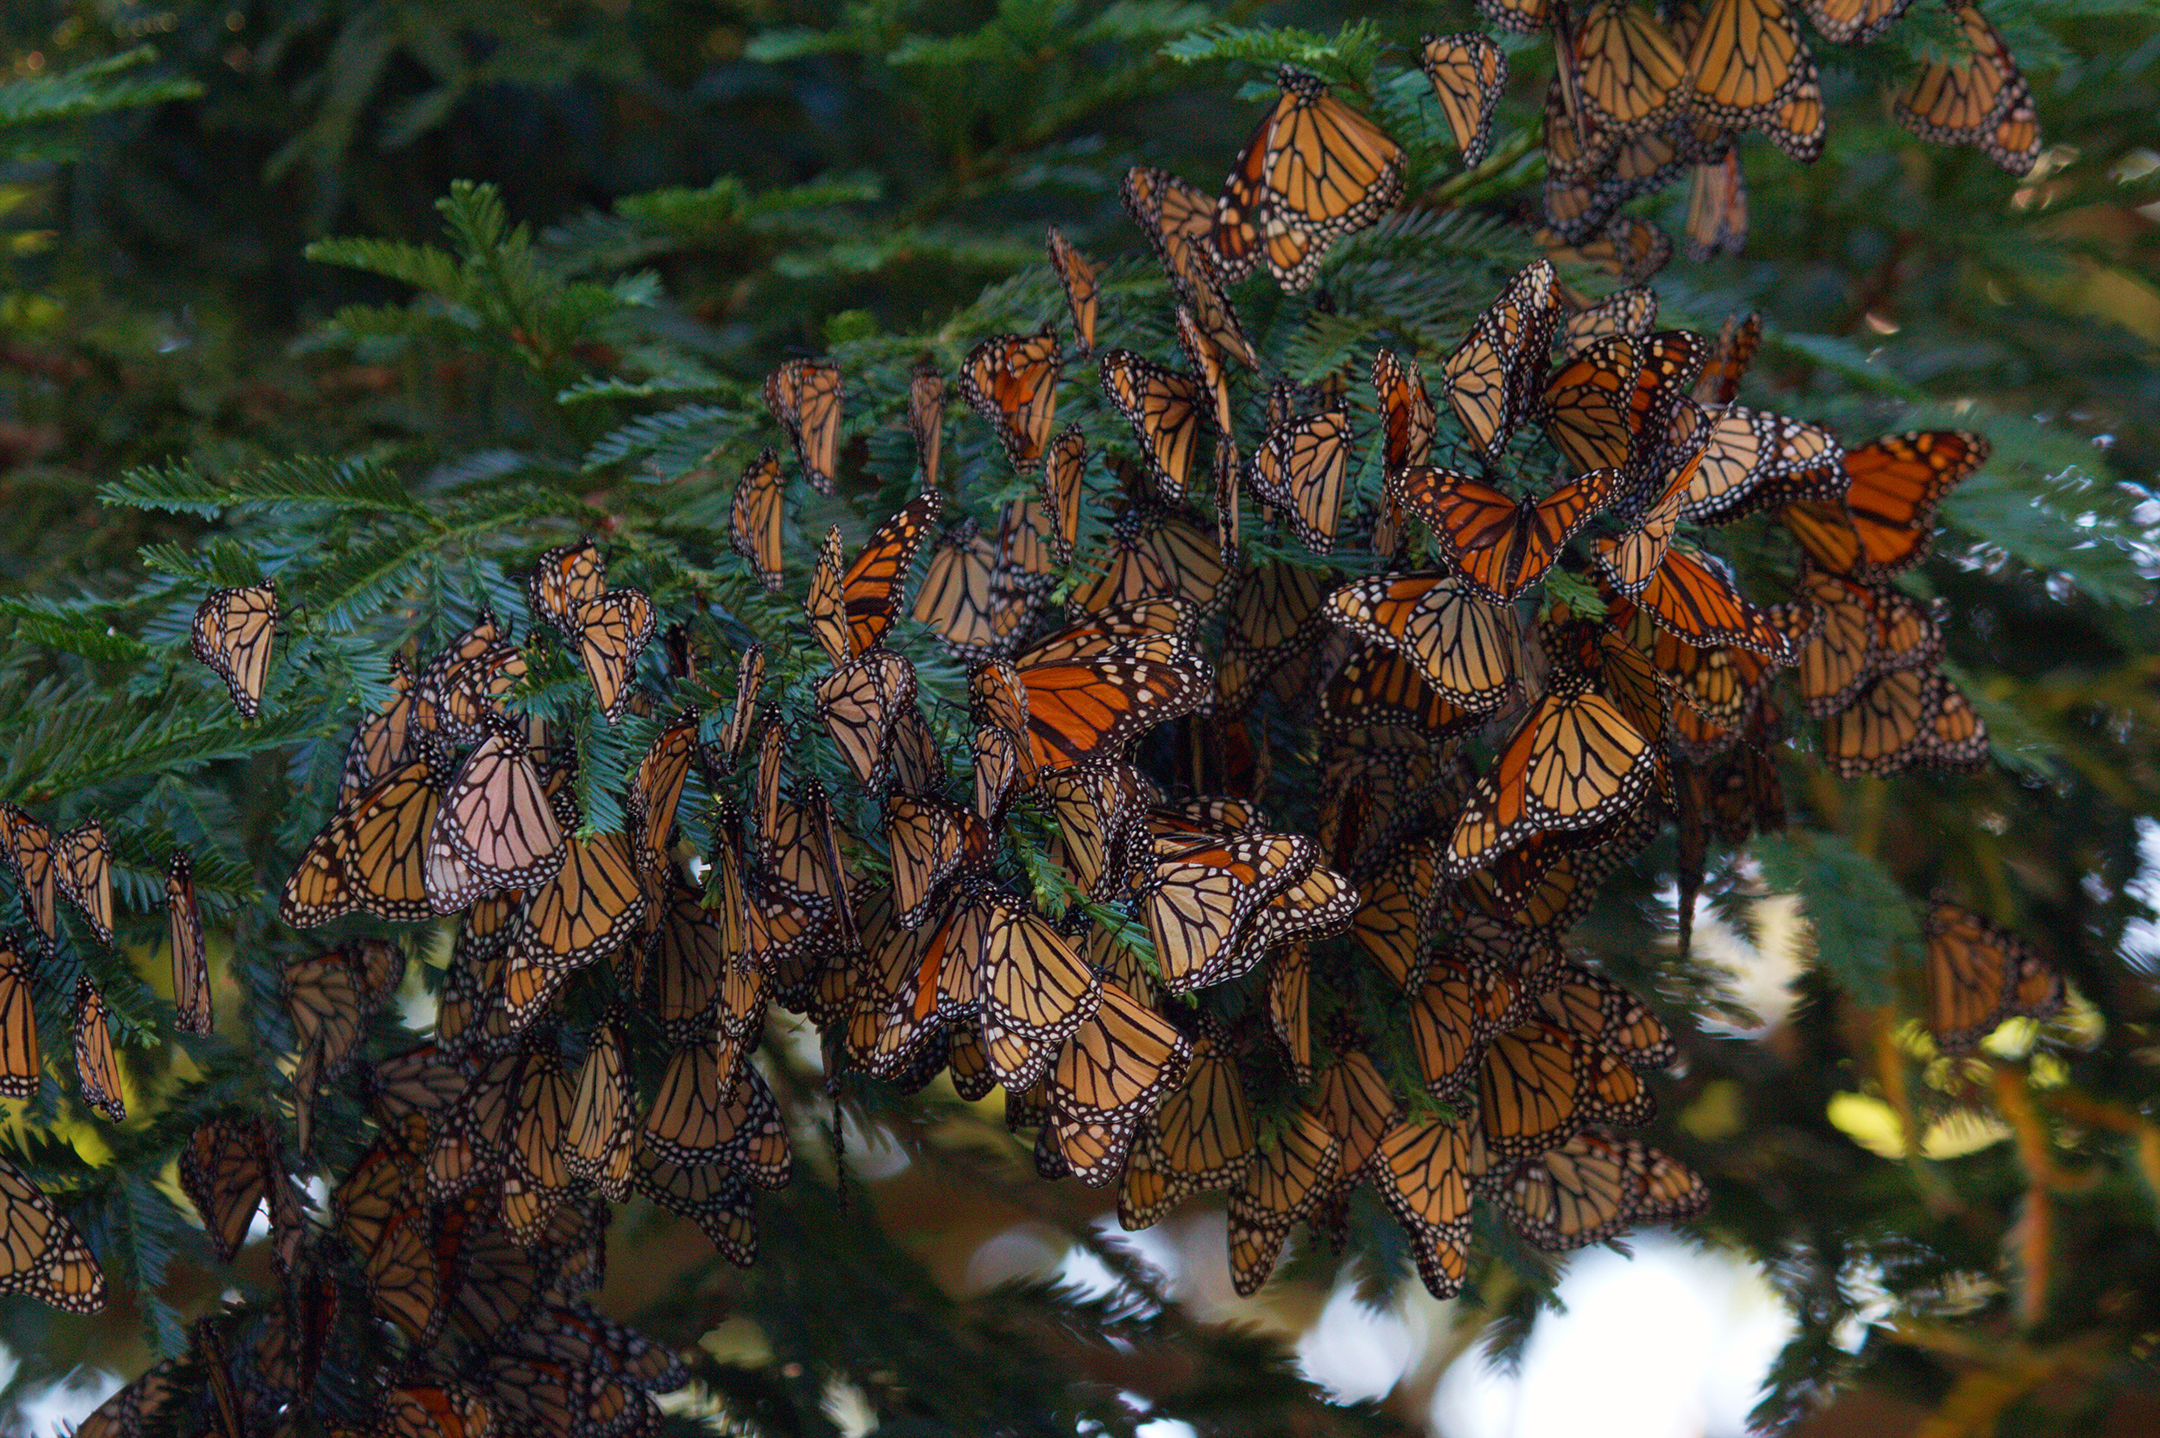 An overwintering cluster of monarch butterflies in California redwood tree.